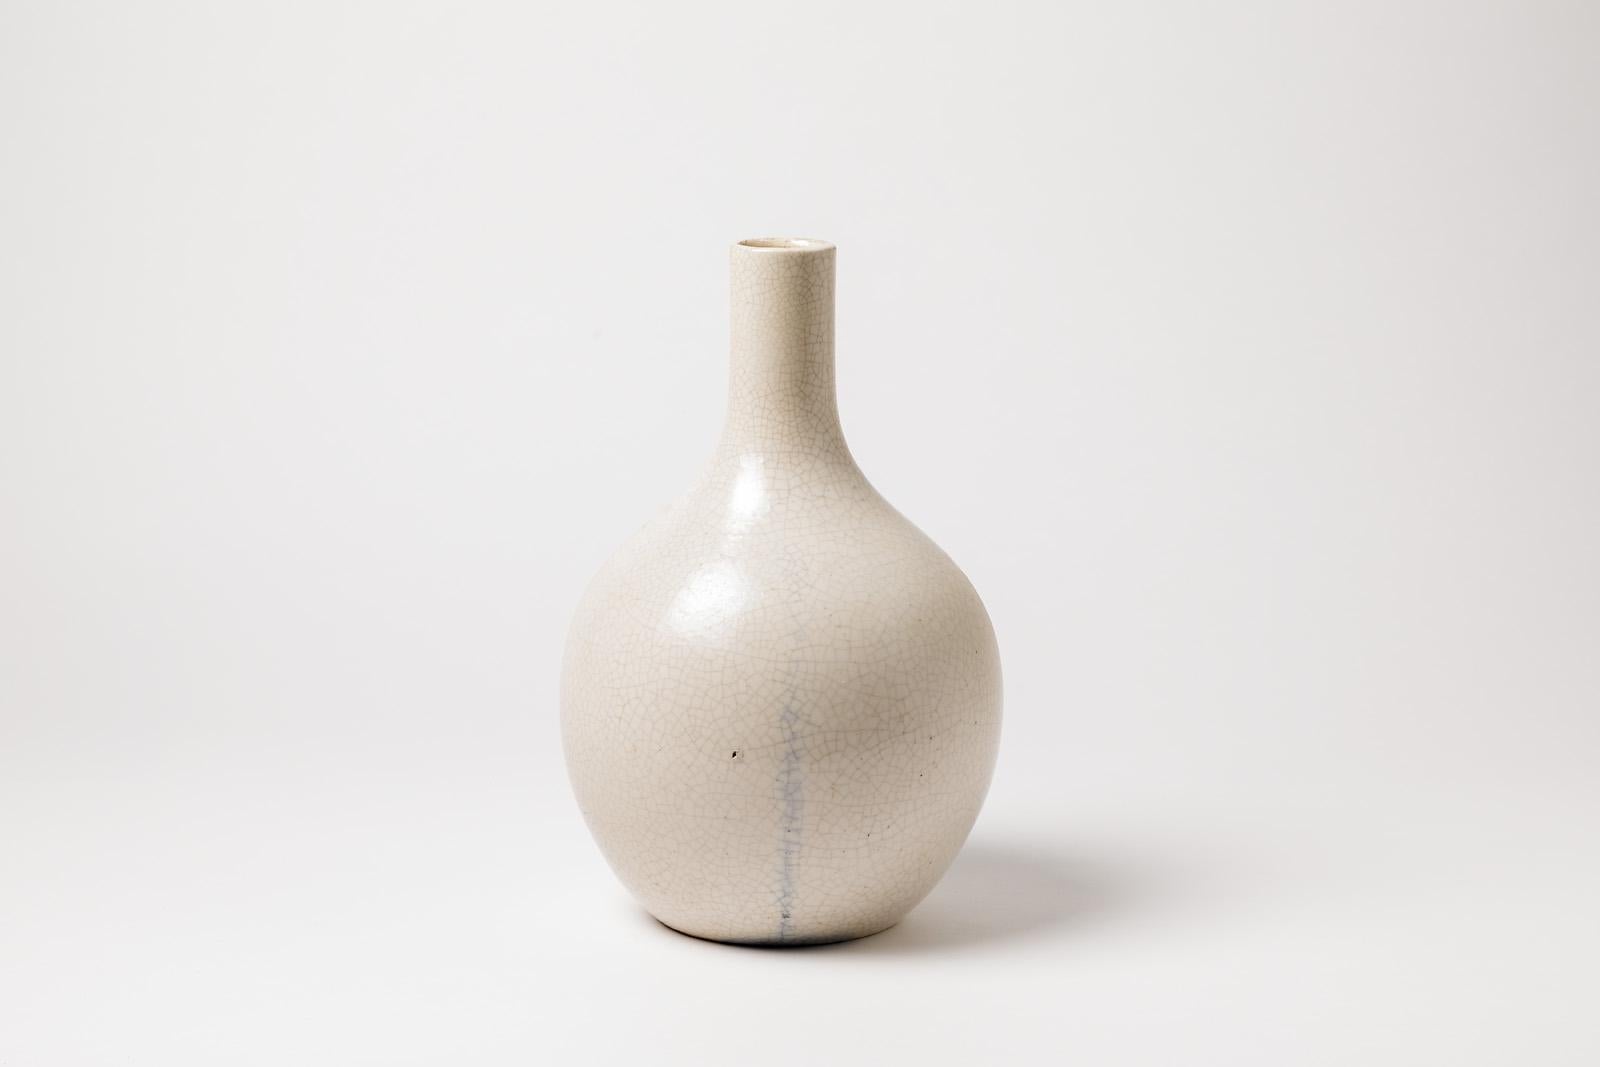 Elegant White Art Deco Ceramic Vase by Henry Chaumeil 1930 Jourdain 1